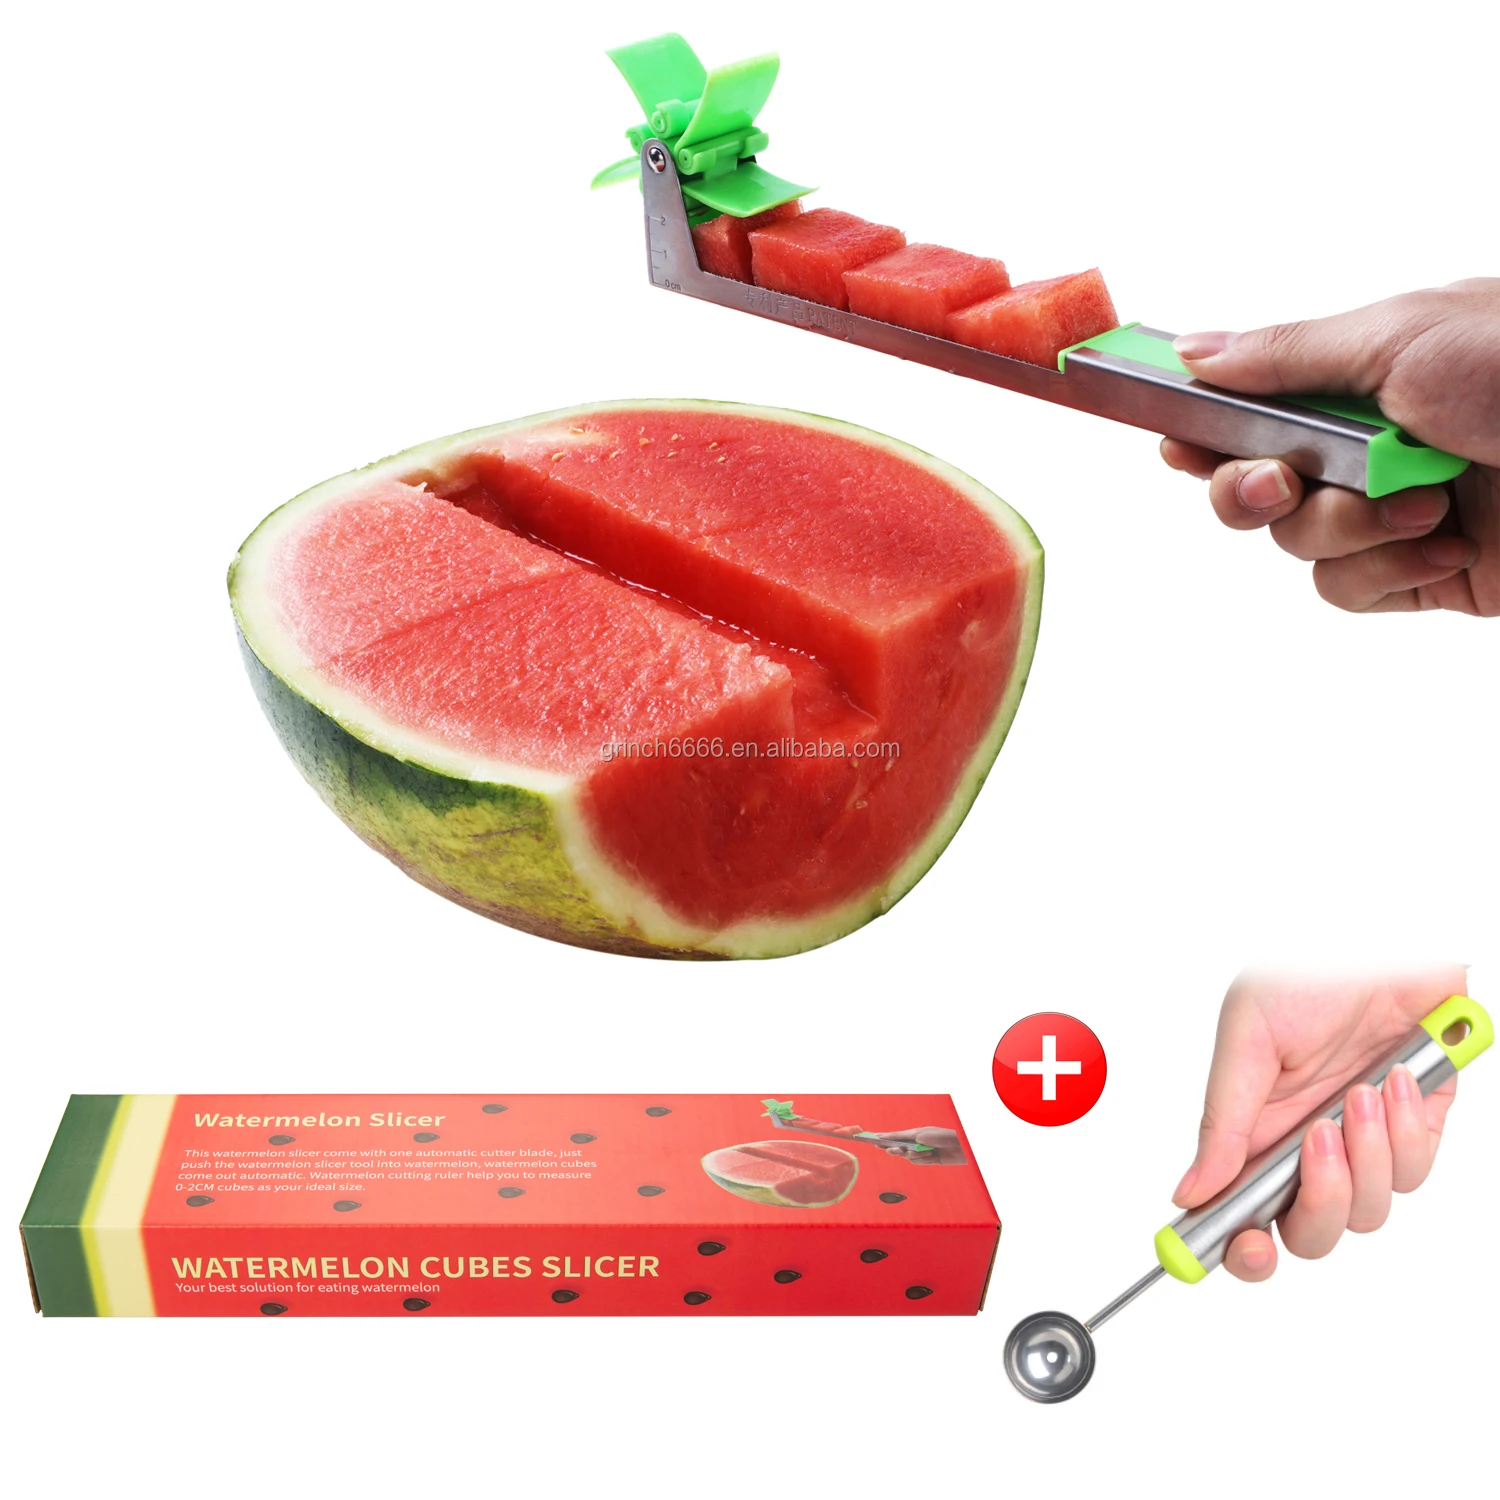 

Watermelon Windmill Cutter Slicer Auto Stainless Steel Melon Cuber Knife Fun Fruit Vegetable Salad Cutter Tool Kitchen Gadget